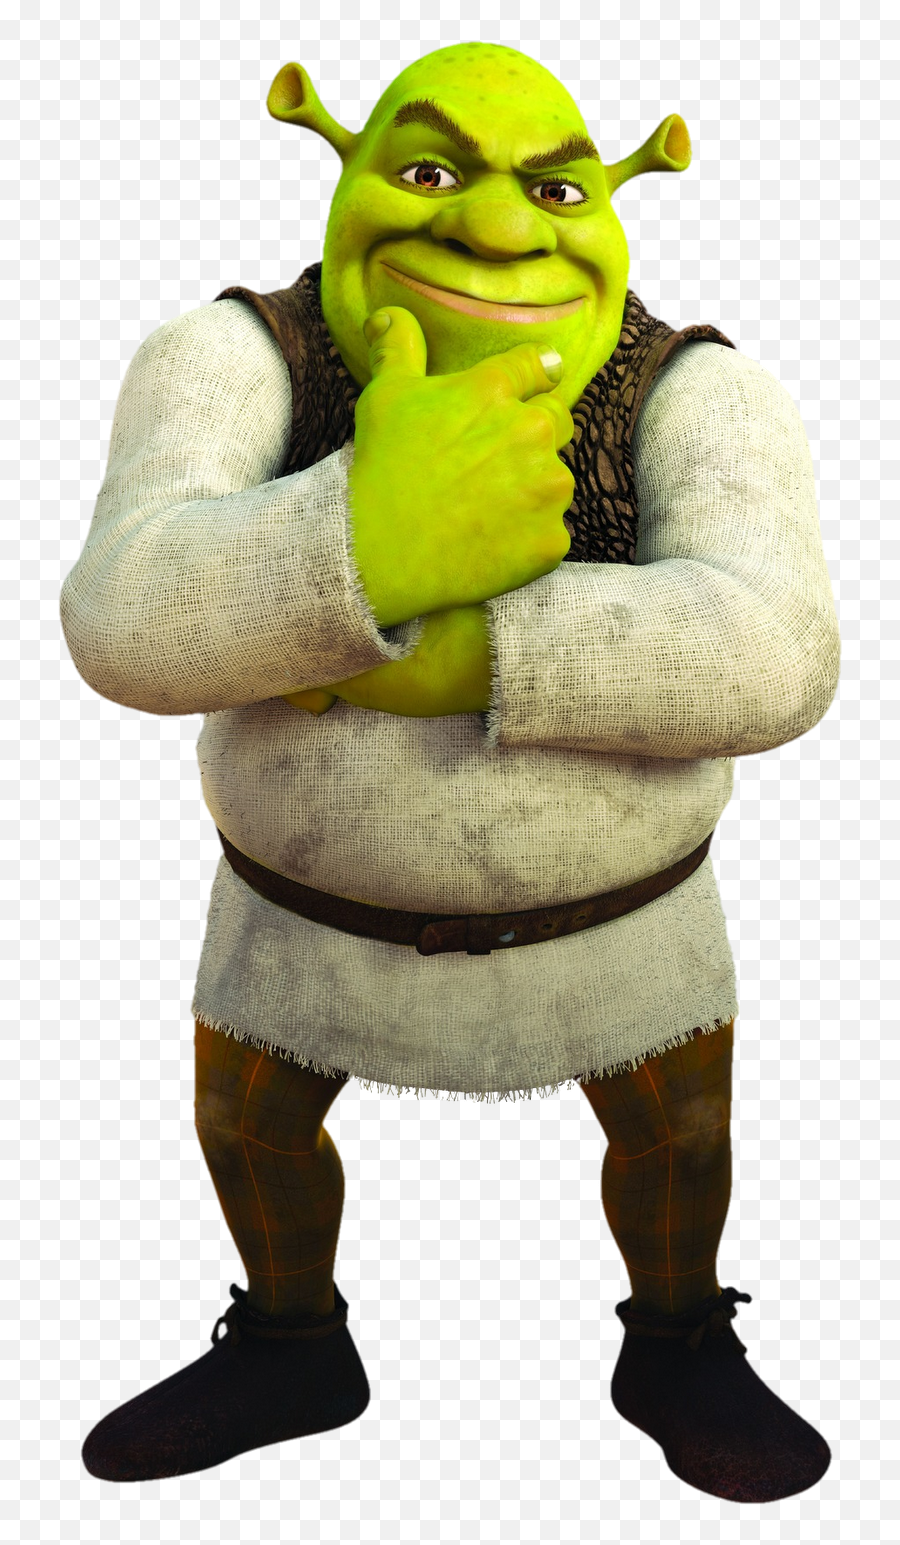 Download Shrek Thinking Png Image For Free - Transparent Background Shrek Png,Thinking Transparent